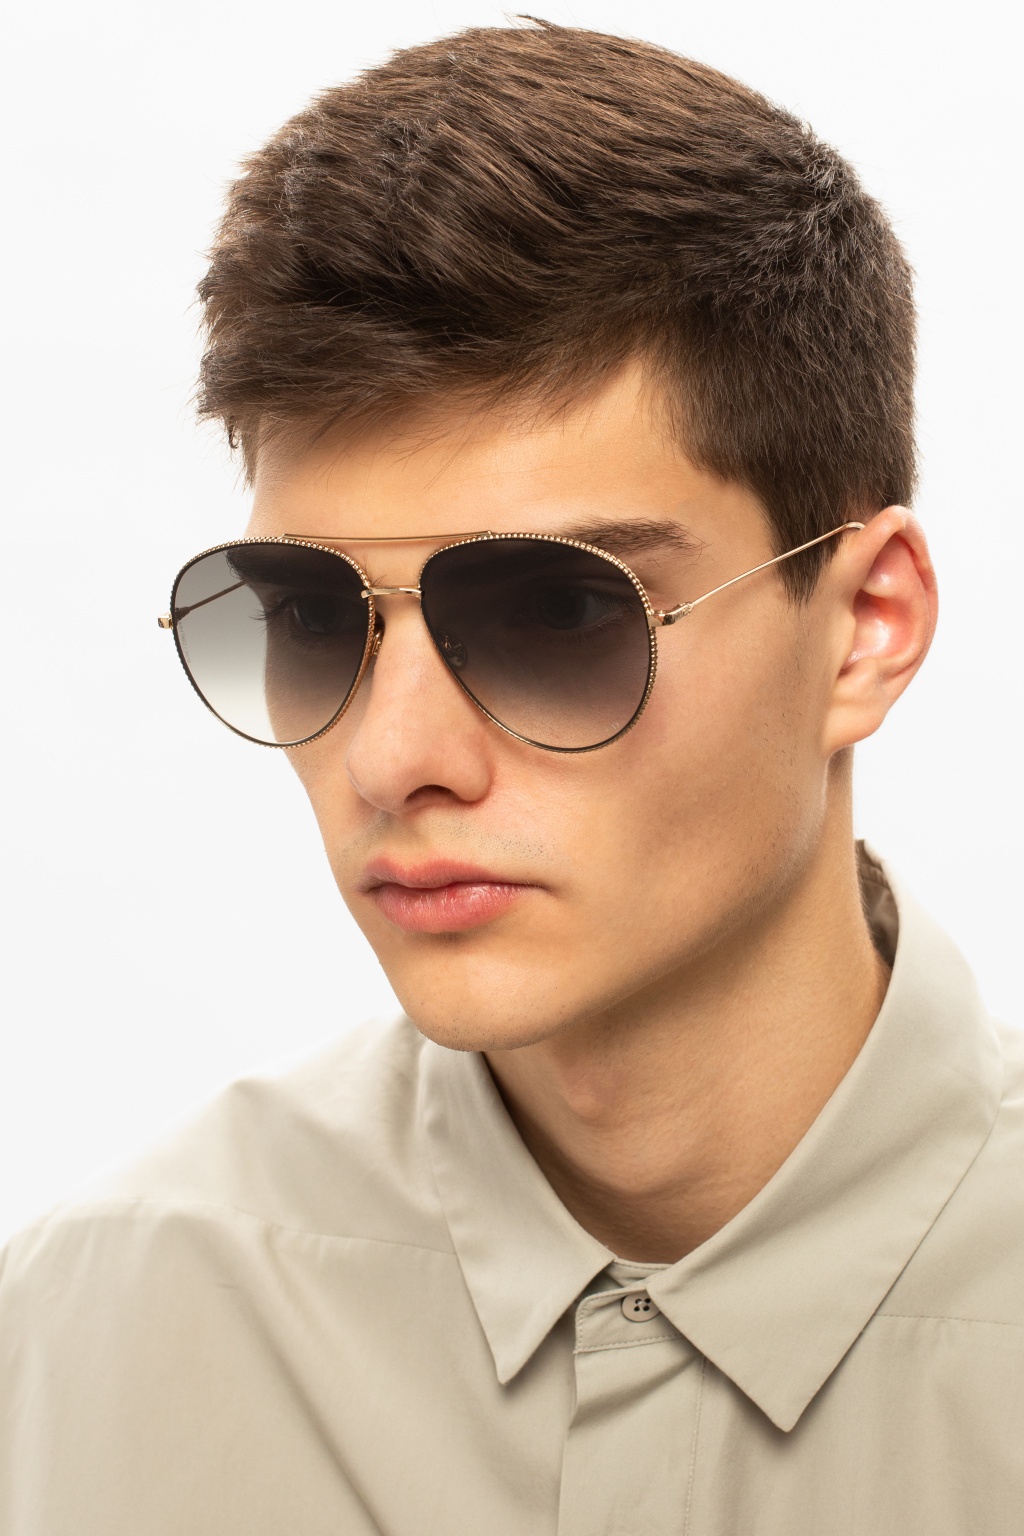 Dior Society 4 Sunglasses  OnlyLenscom